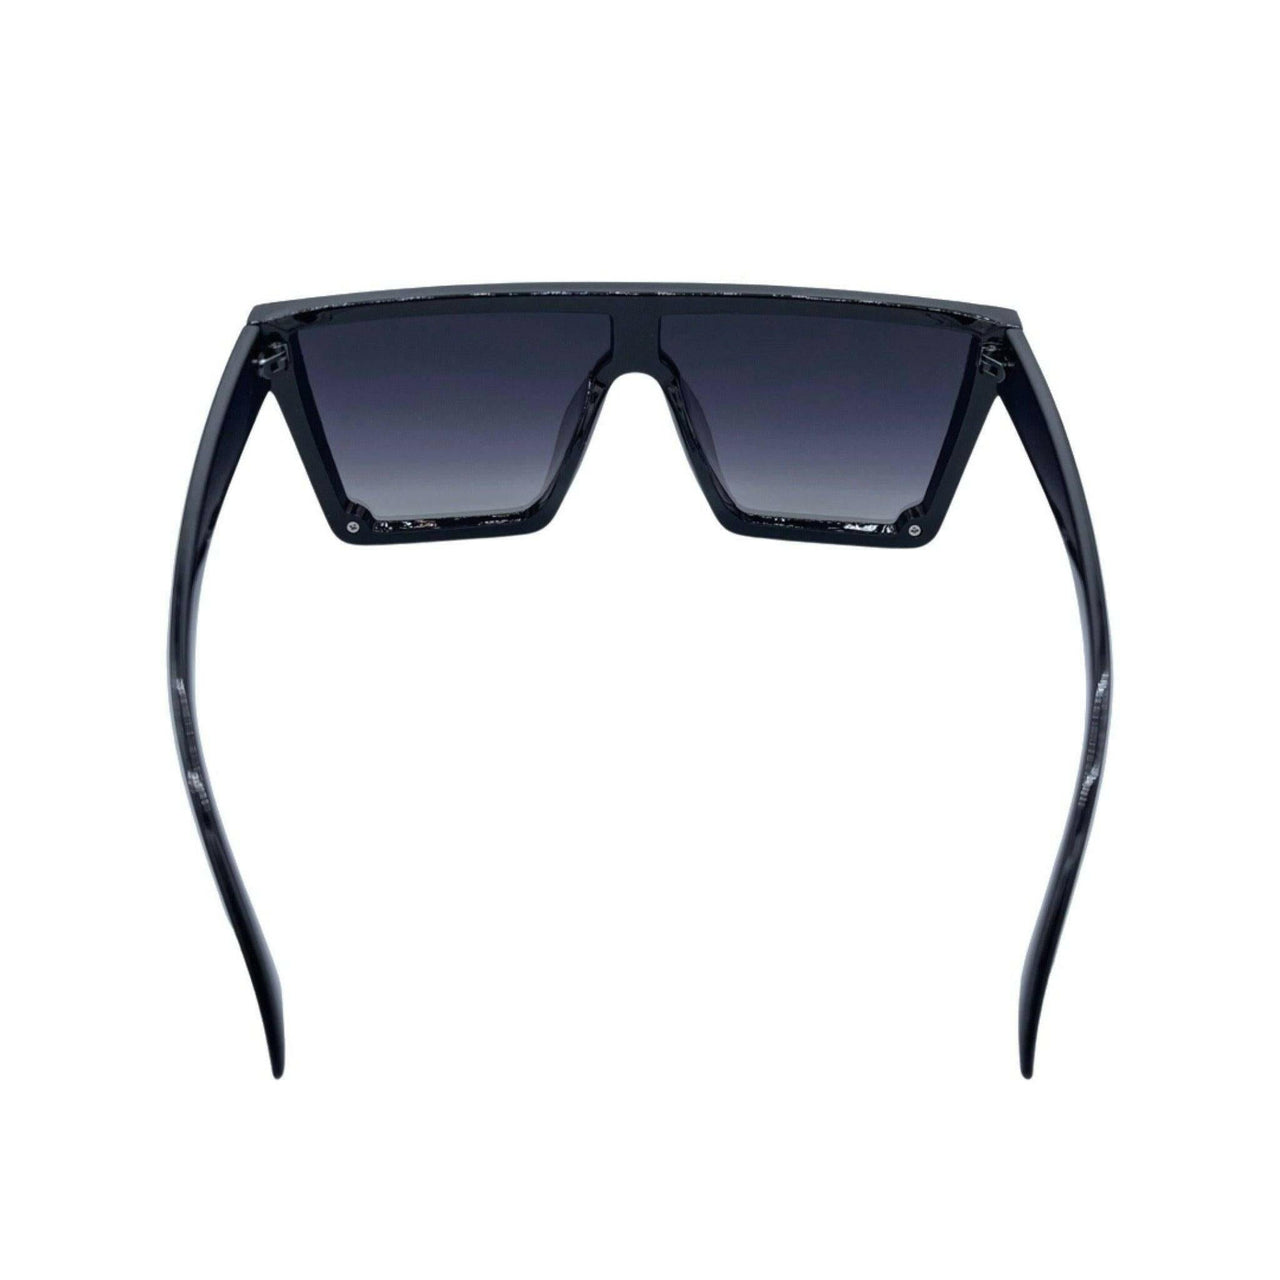 Silver OG Mirrored Sunglasses - Rebel Reaper Clothing Company Sunglasses